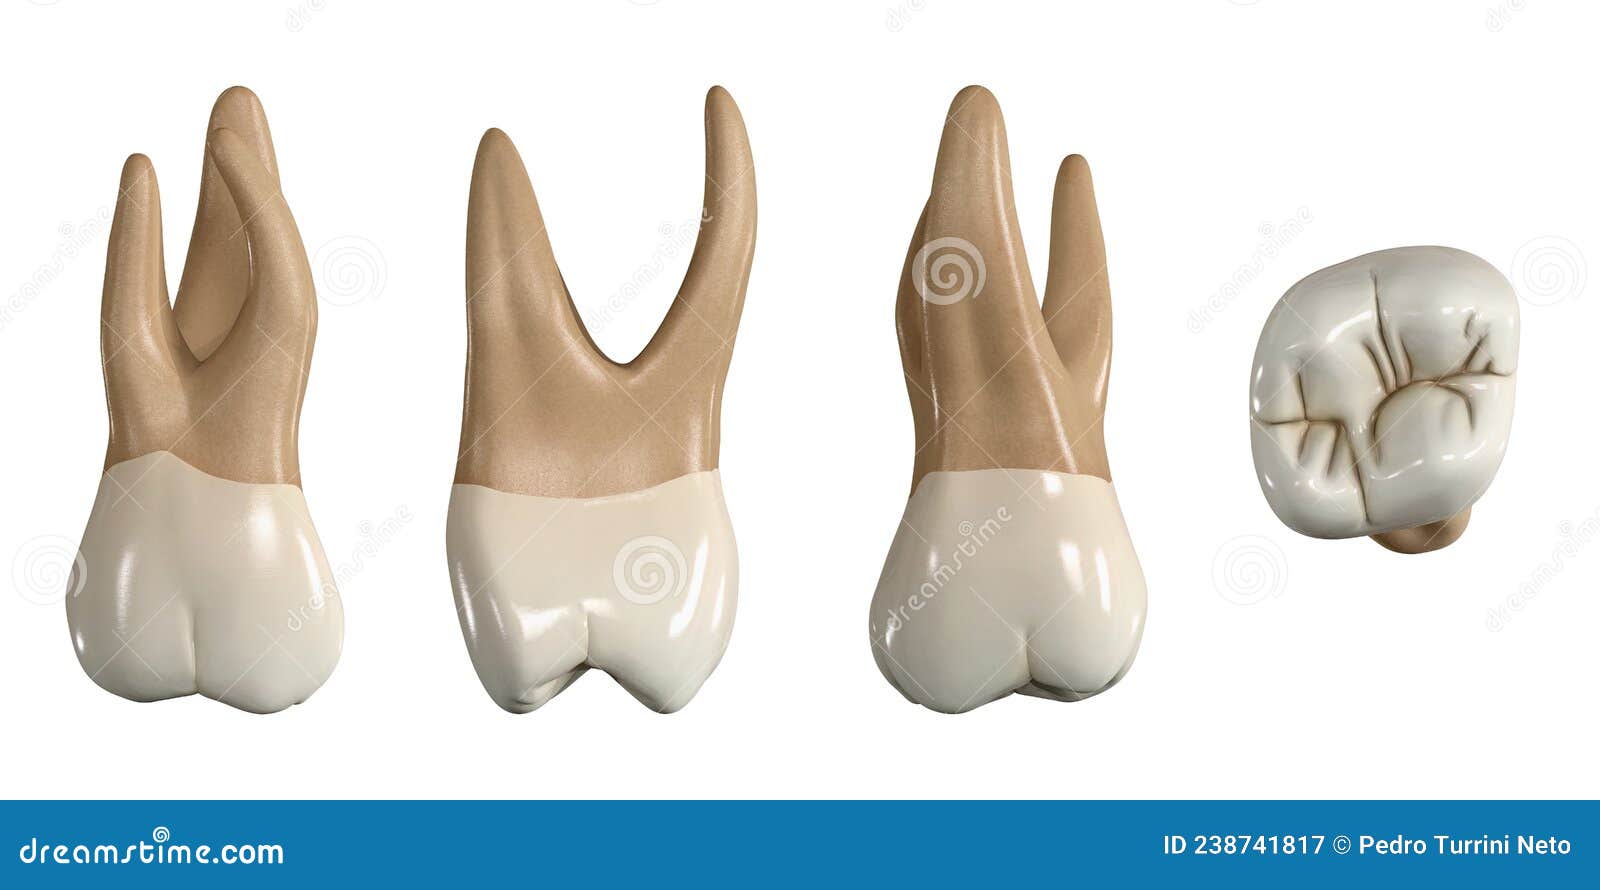 permanent upper second molar tooth. 3d  of the anatomy of the maxillary second molar tooth in buccal, proximal, lingua